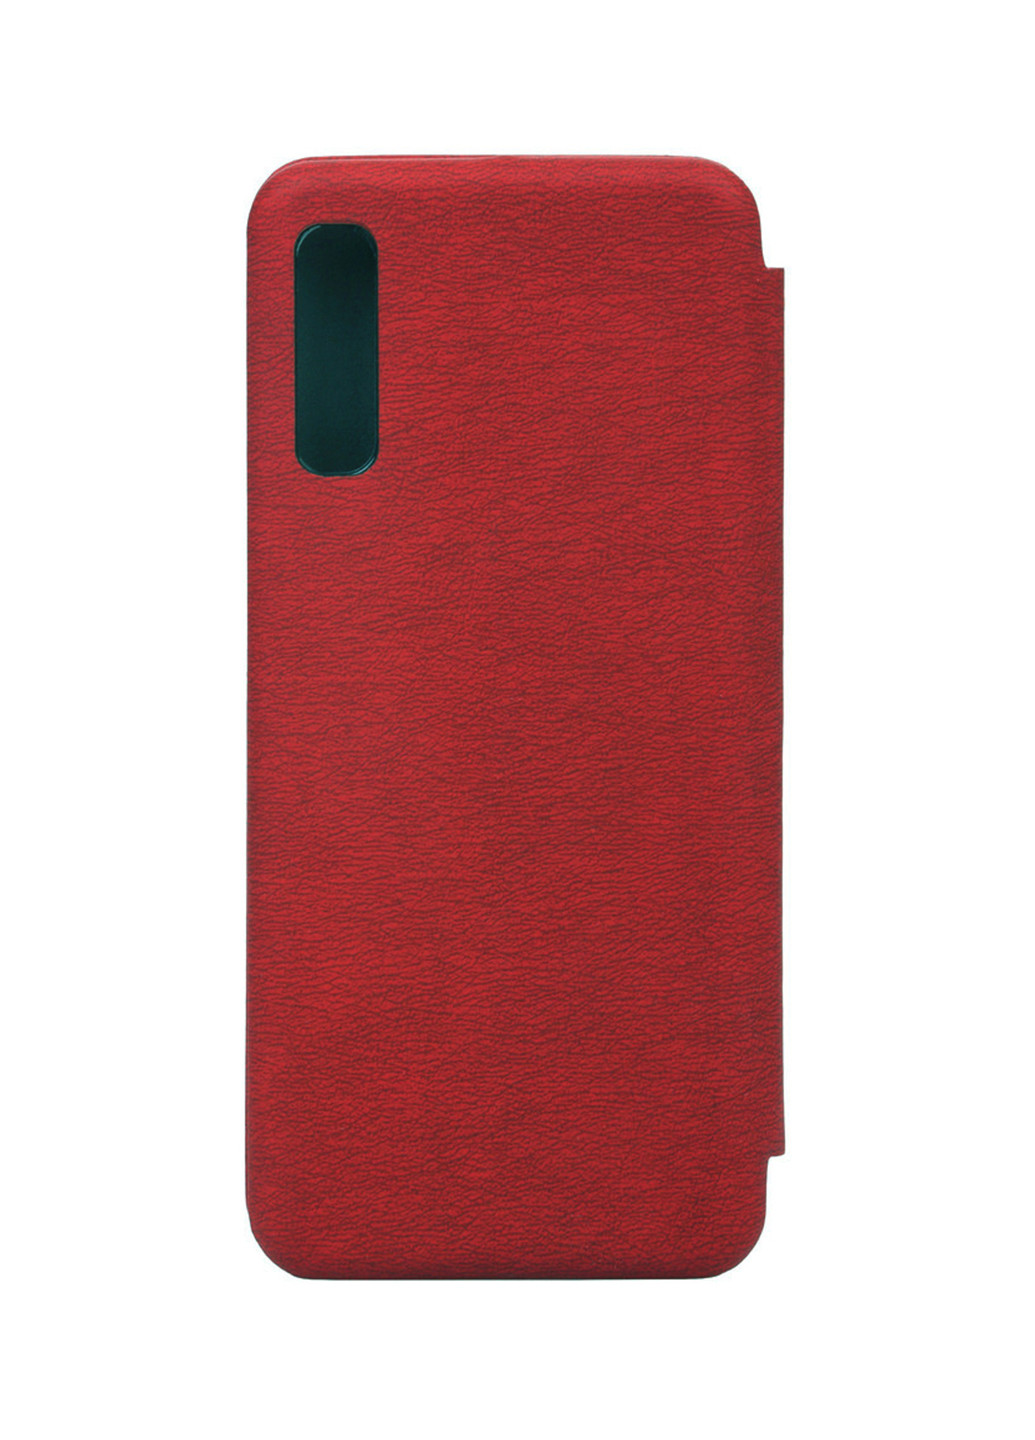 Чохол-книжка Exclusive для Samsung Galaxy A50 SM-A505 Burgundy Red (703704) BeCover книжка exclusive для samsung galaxy a50 sm-a505 burgundy red (703704) (145630646)